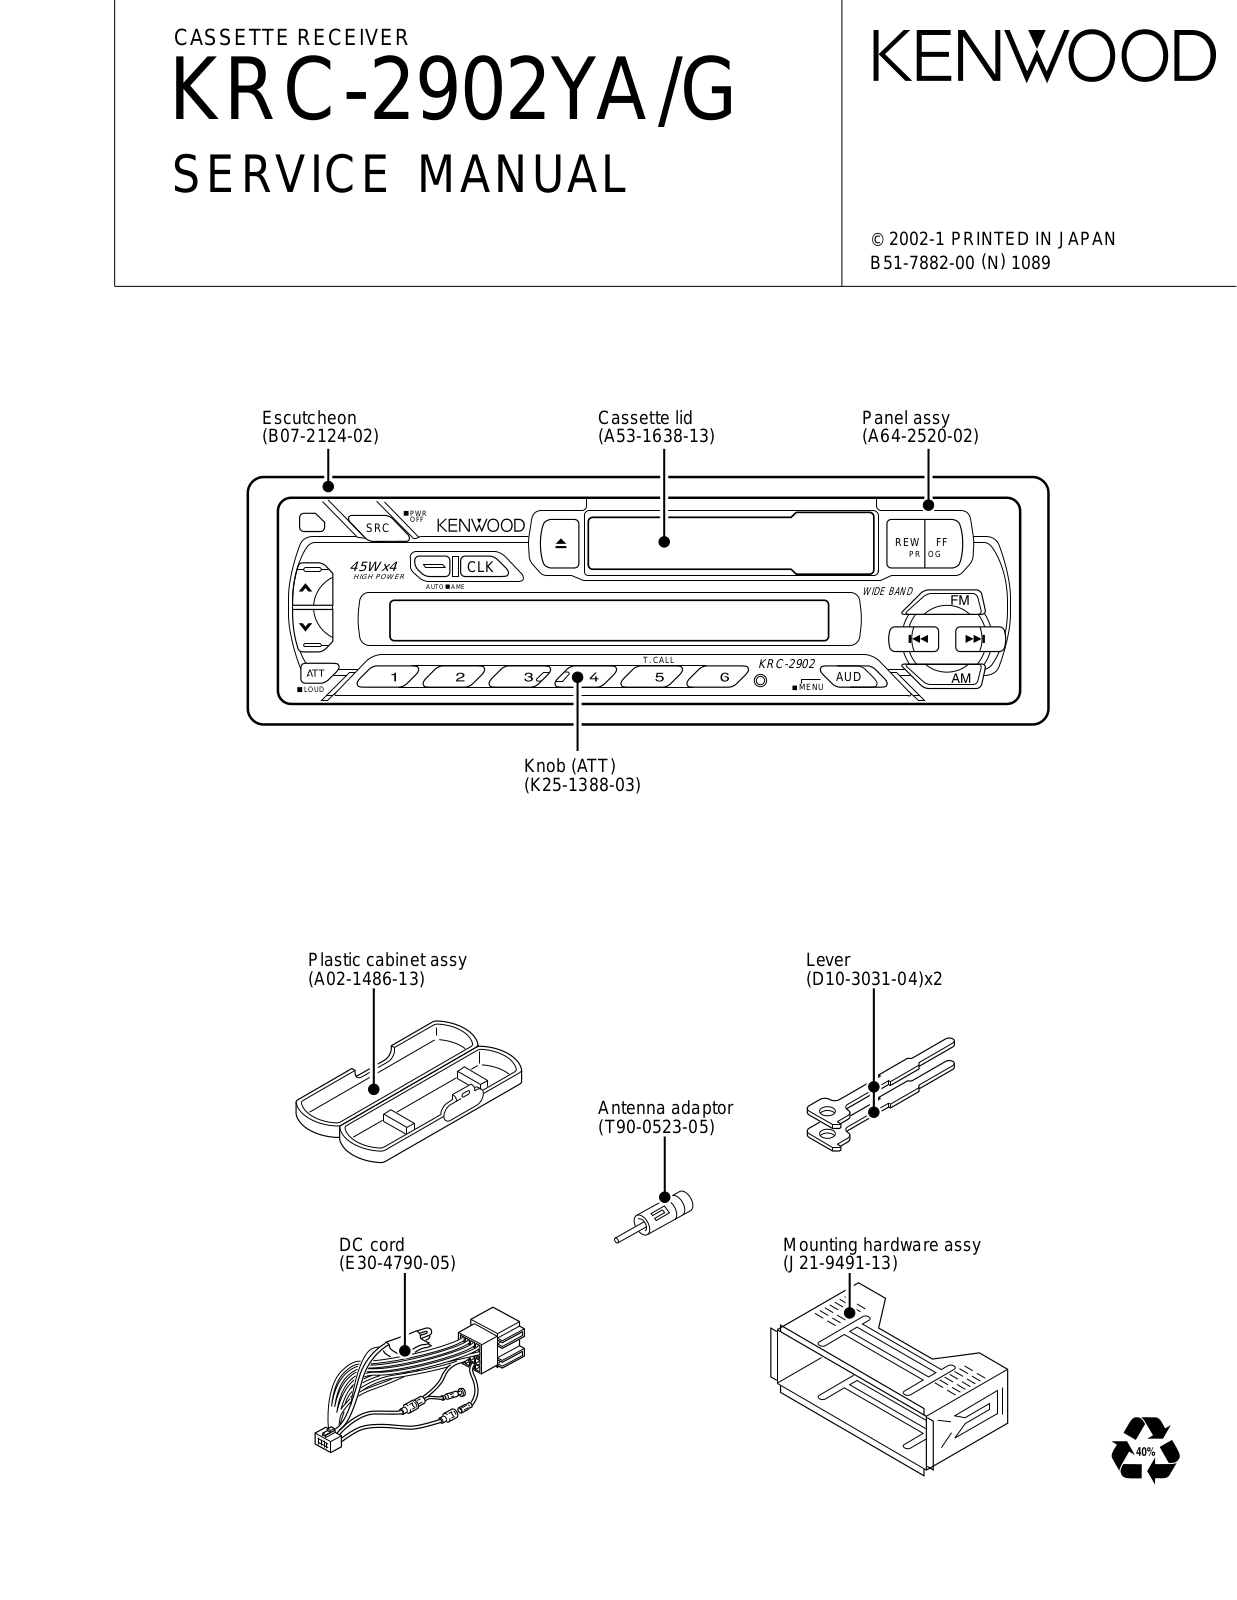 Kenwood KRC-2902 G, KRC-2902 YA Service Manual